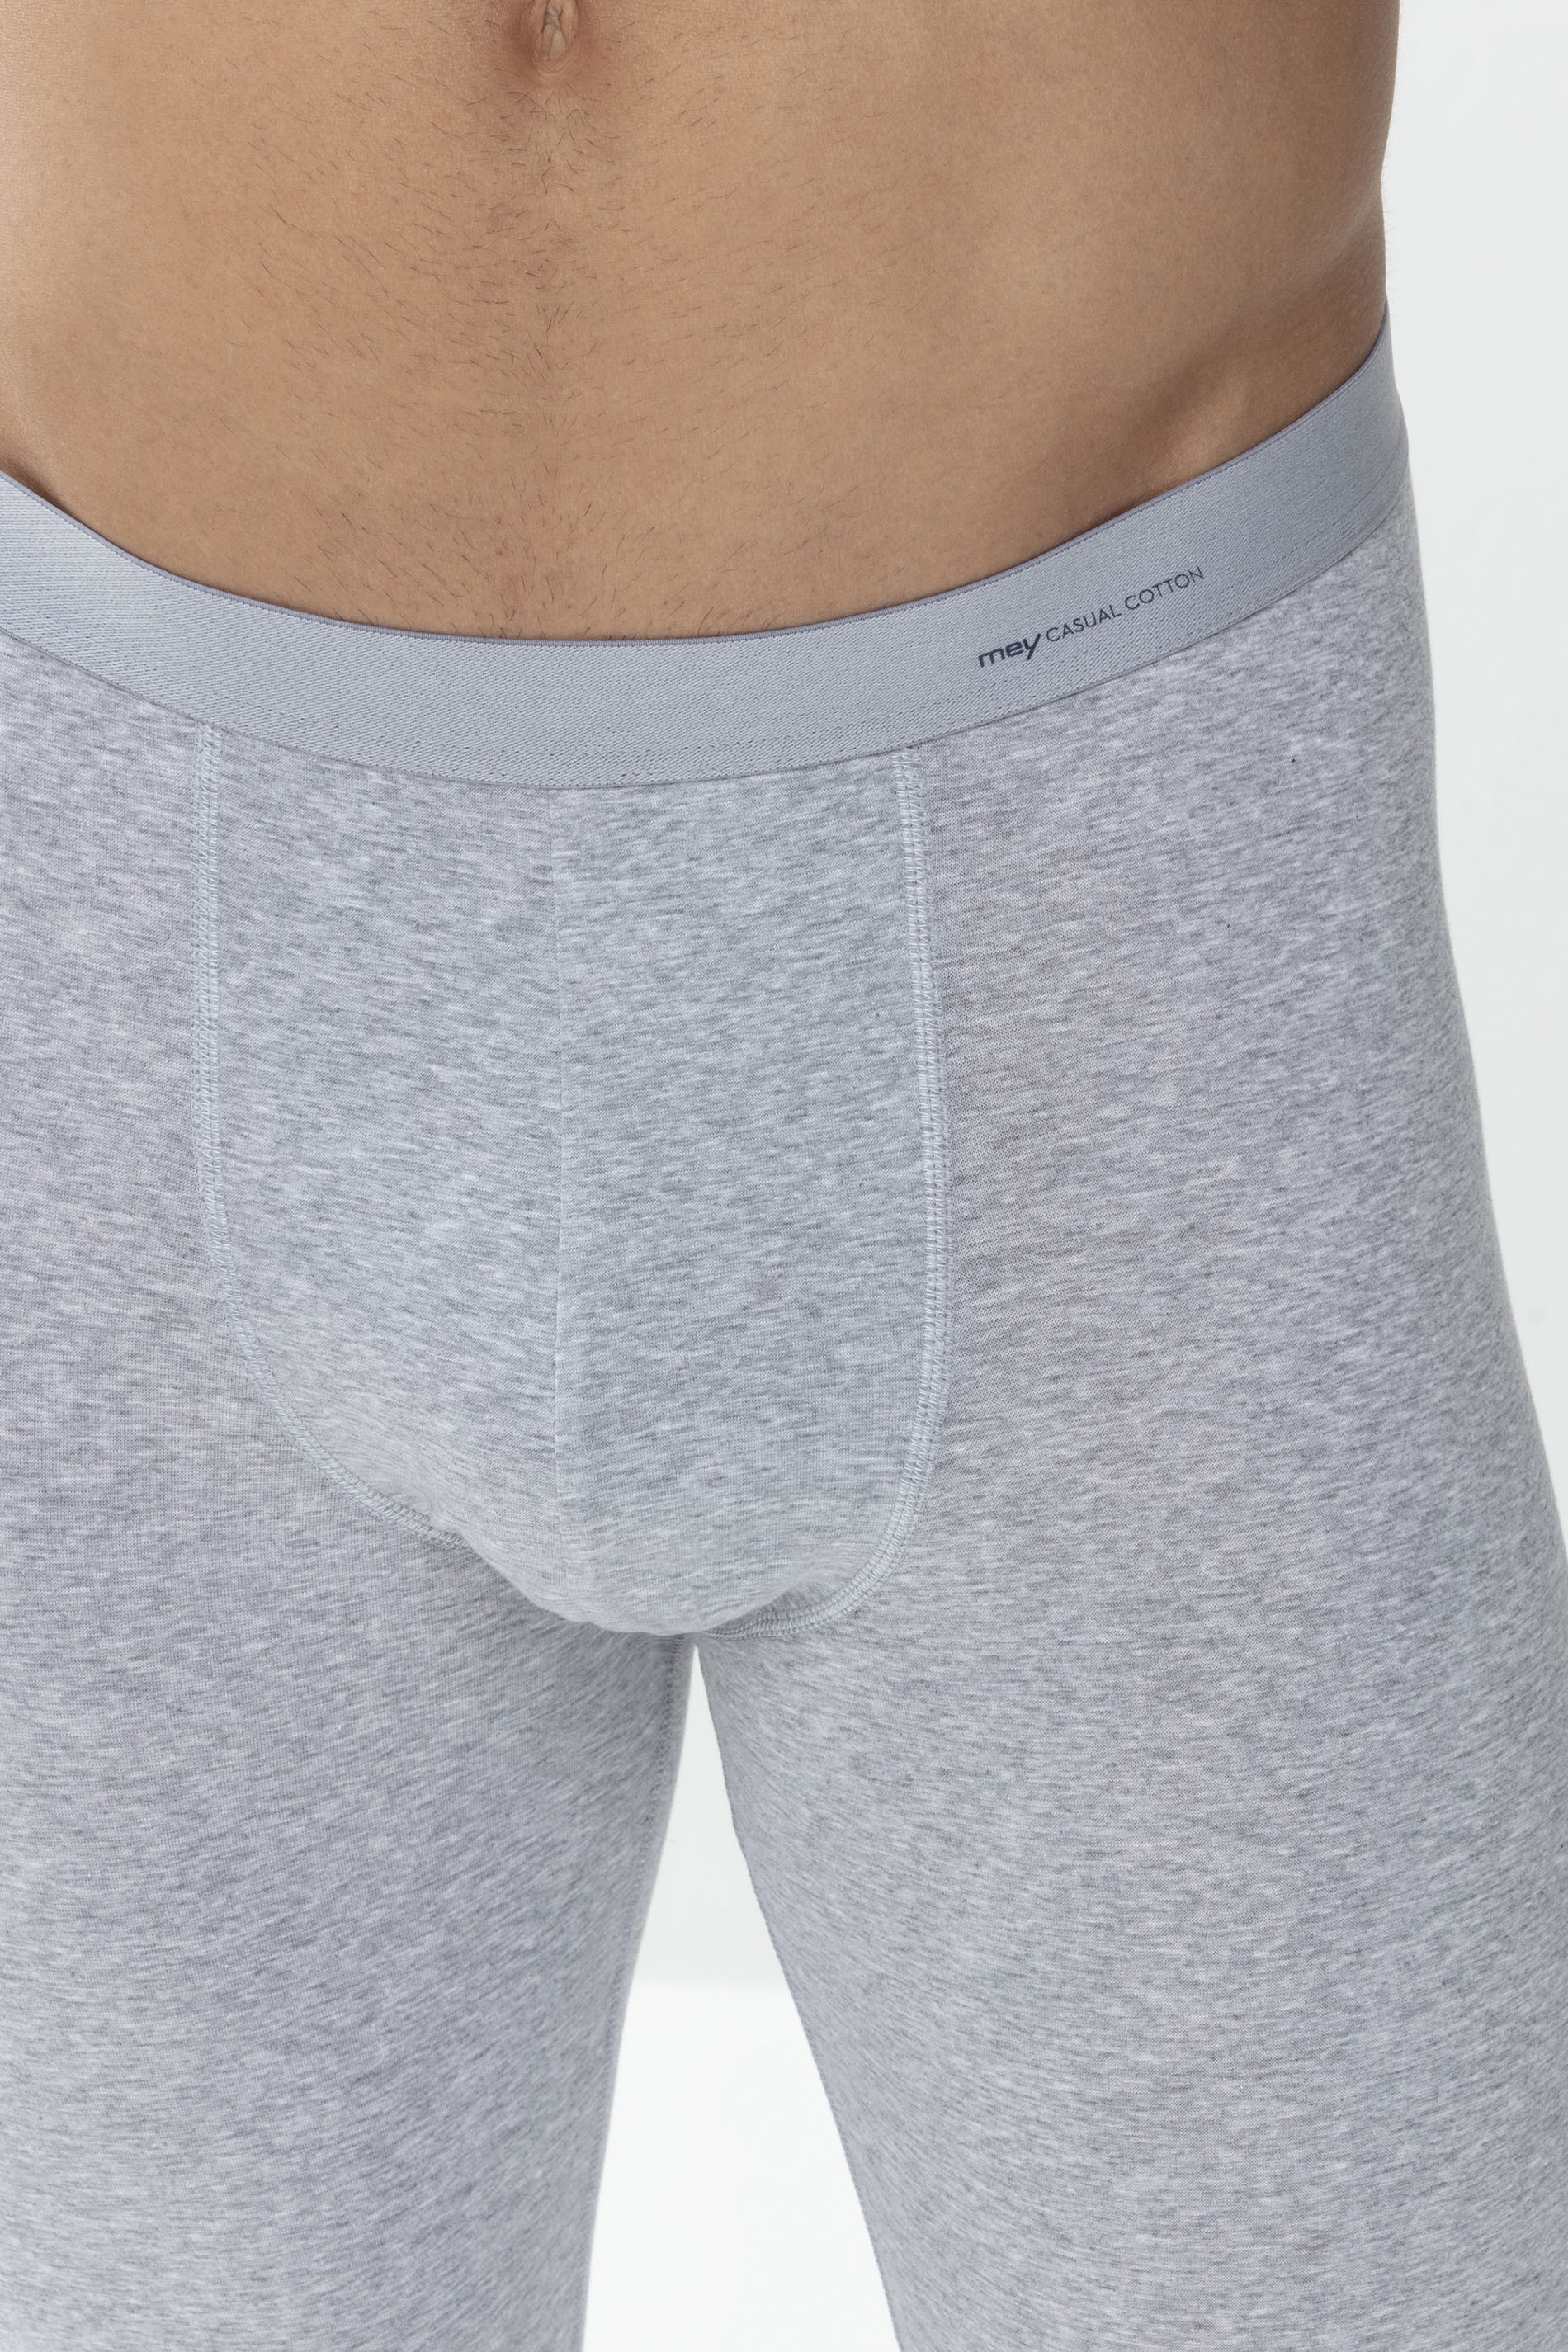 Long-Shorts Light Grey Melange Serie Casual Cotton Detailansicht 01 | mey®